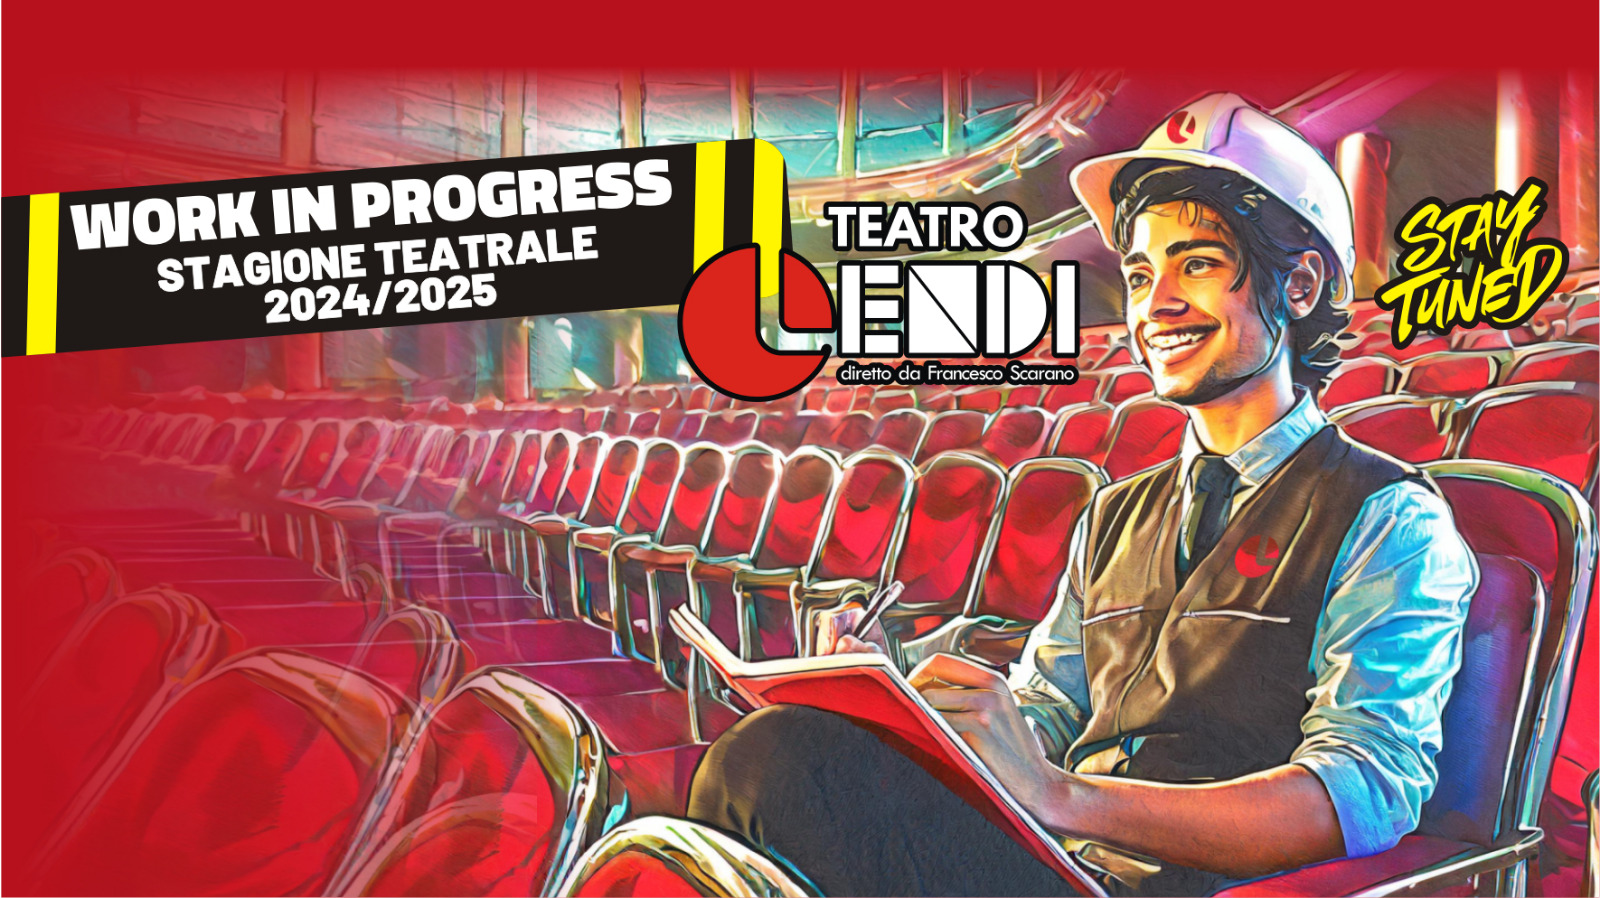 teatro lendi_stagione teatrale 2024-25_work in progress